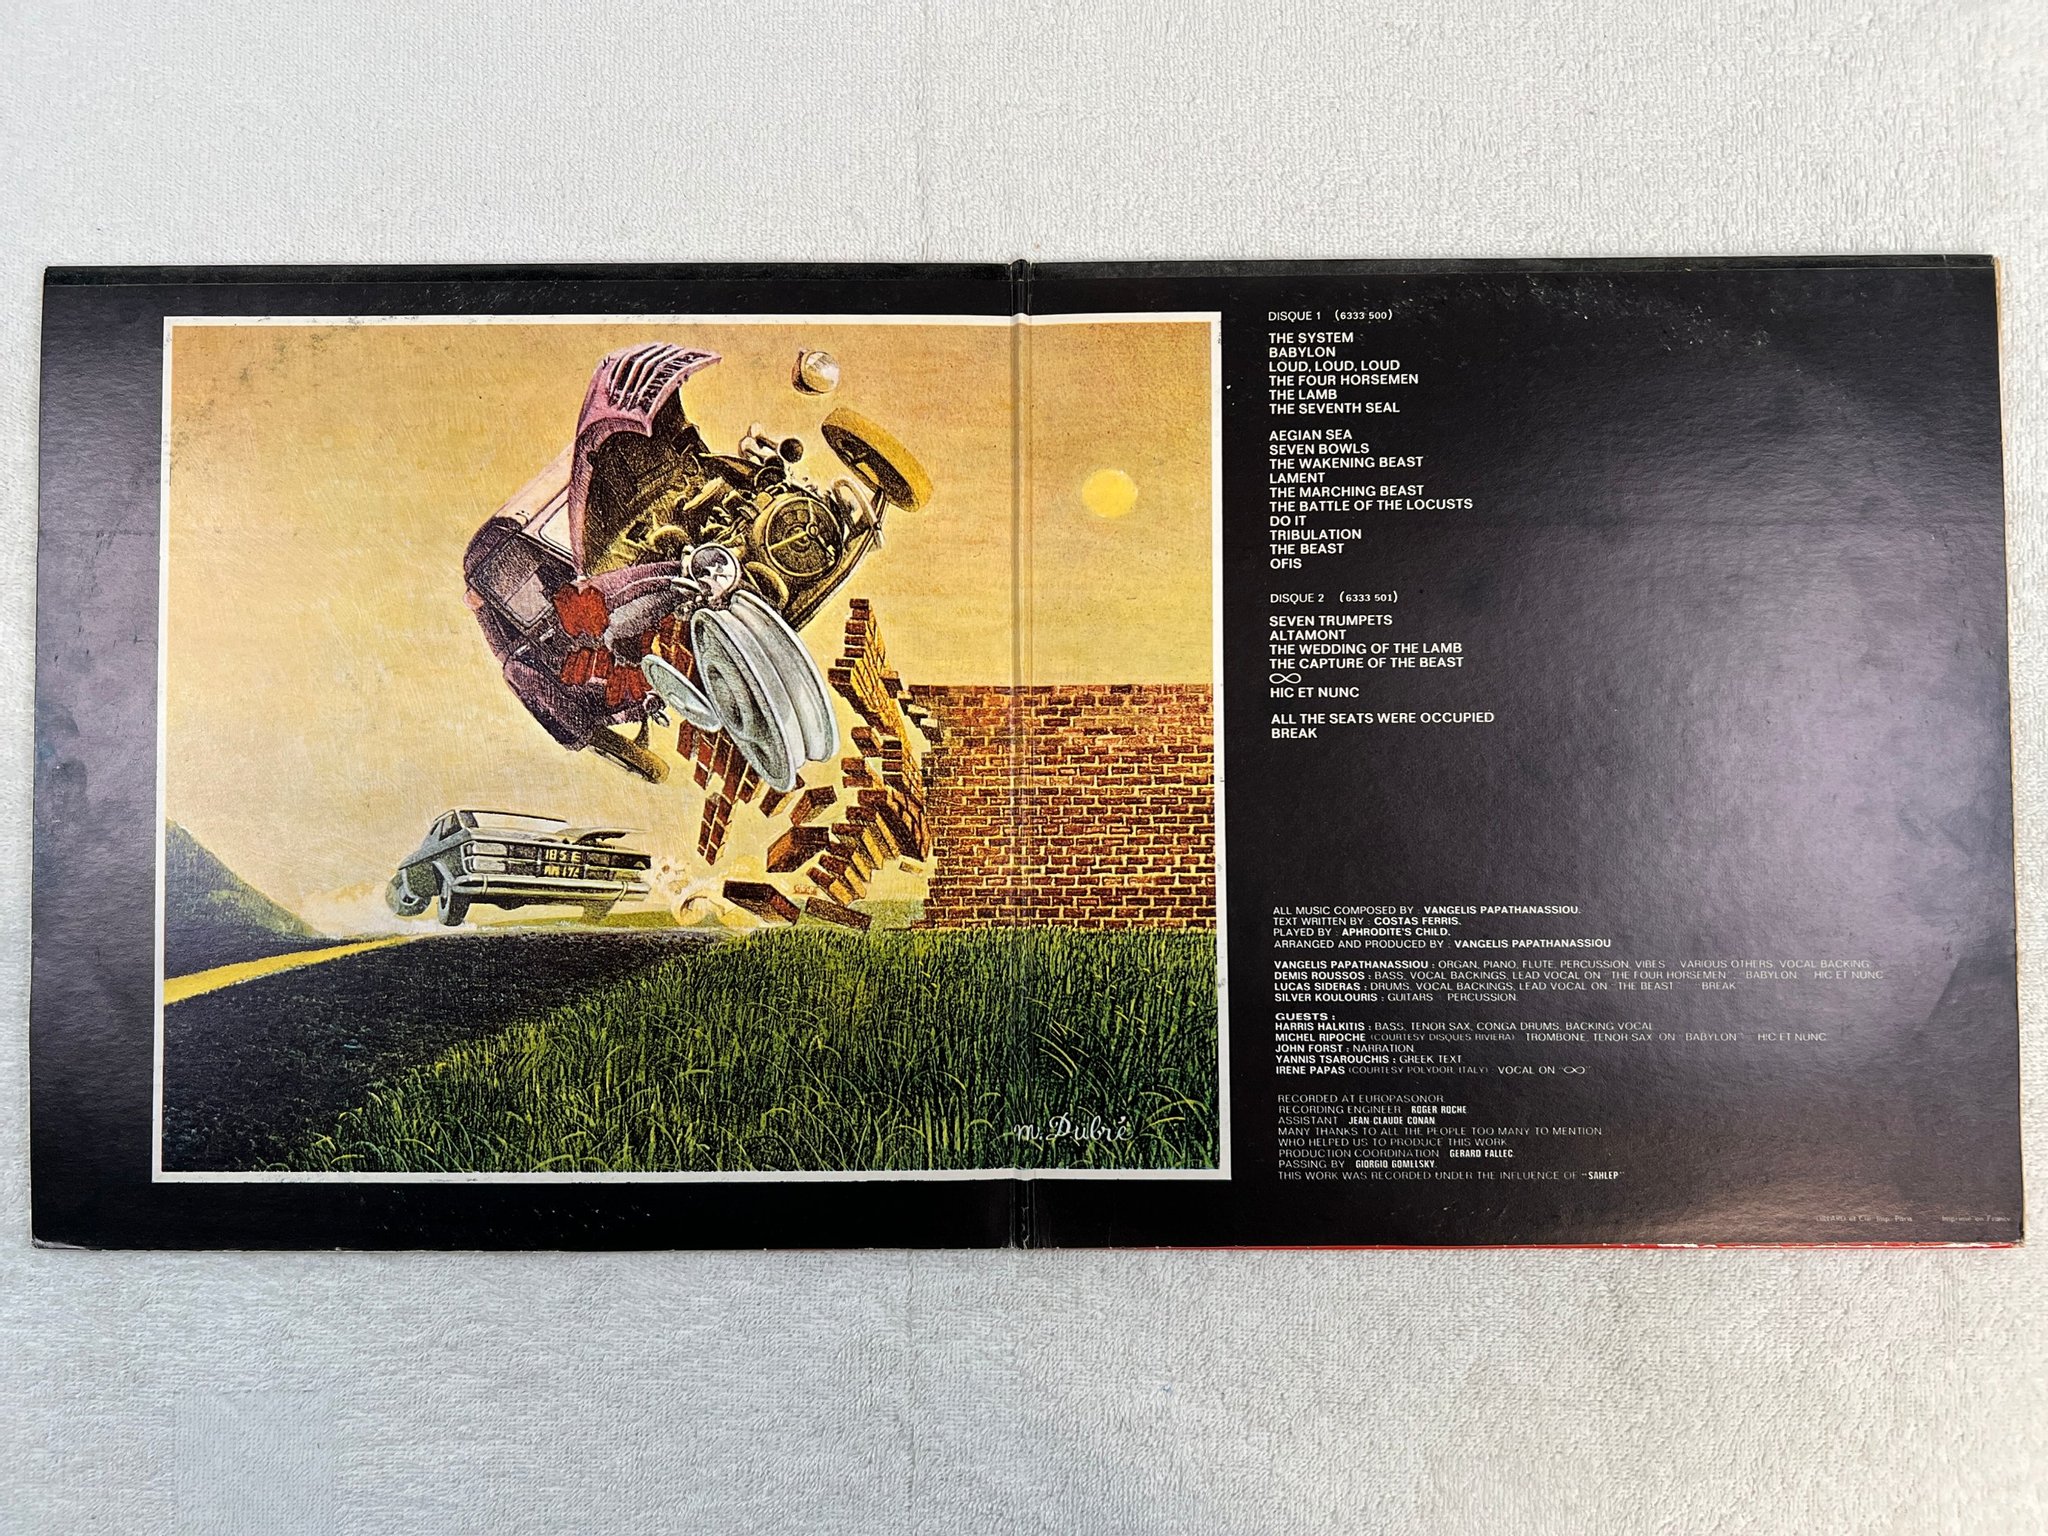 Omslagsbild för skivan APHRODITE'S CHILD 666 2xLP re Fra VERTIGO 6333501